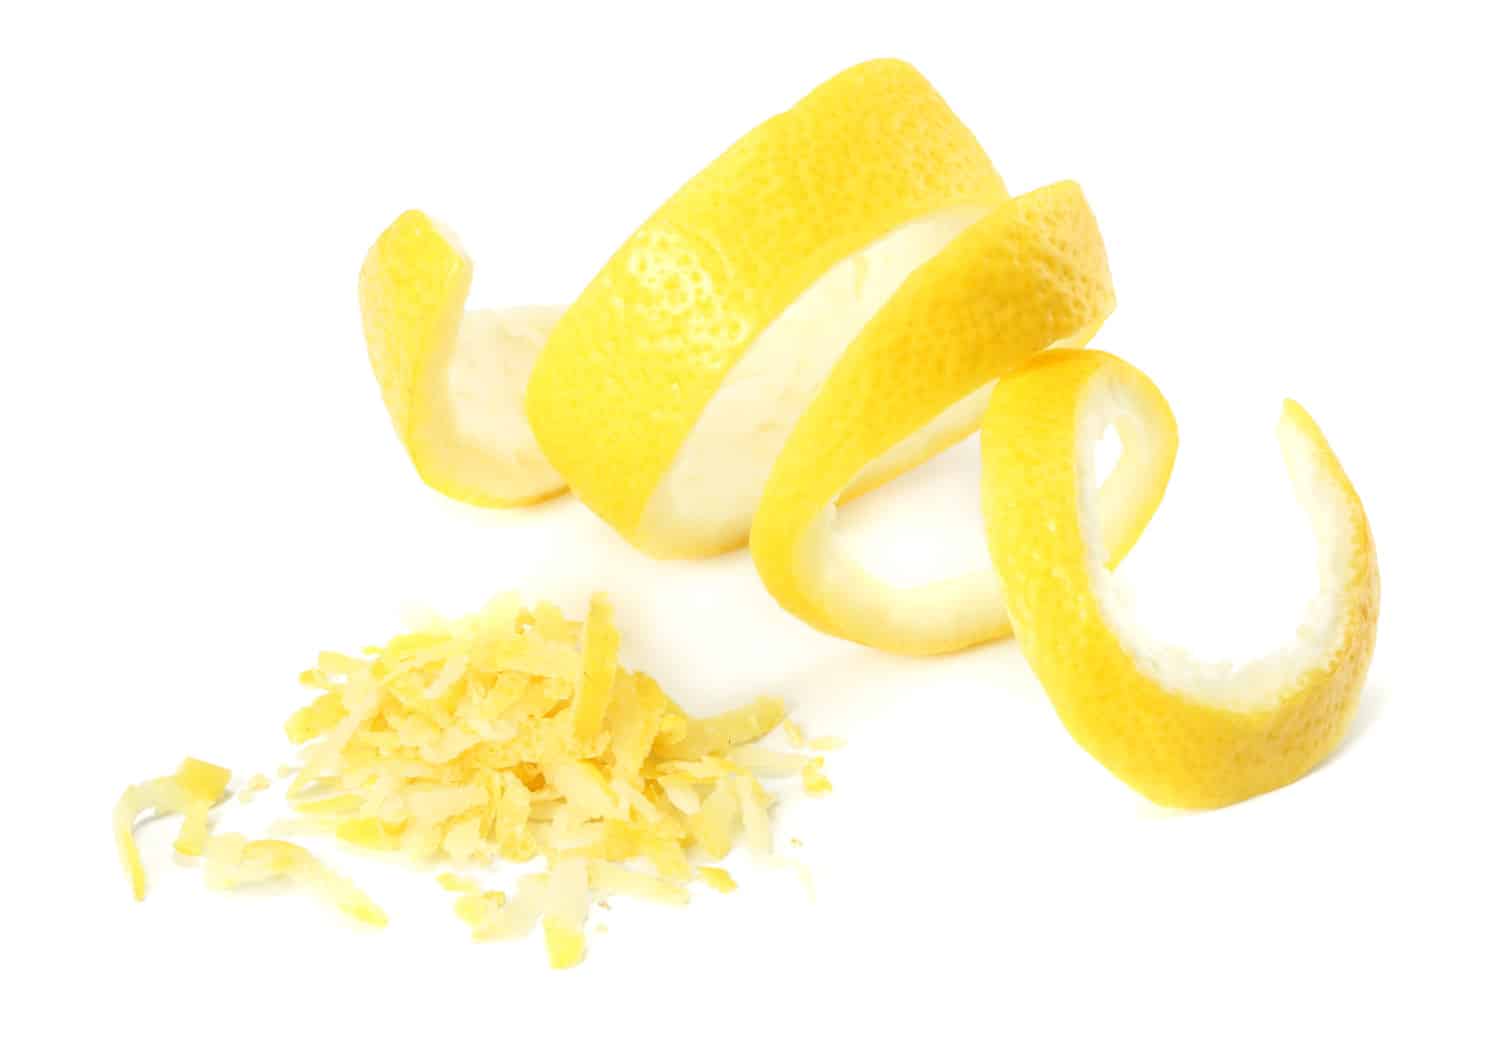 fresh lemon peel and lemon zest isolated on white background. healthy food